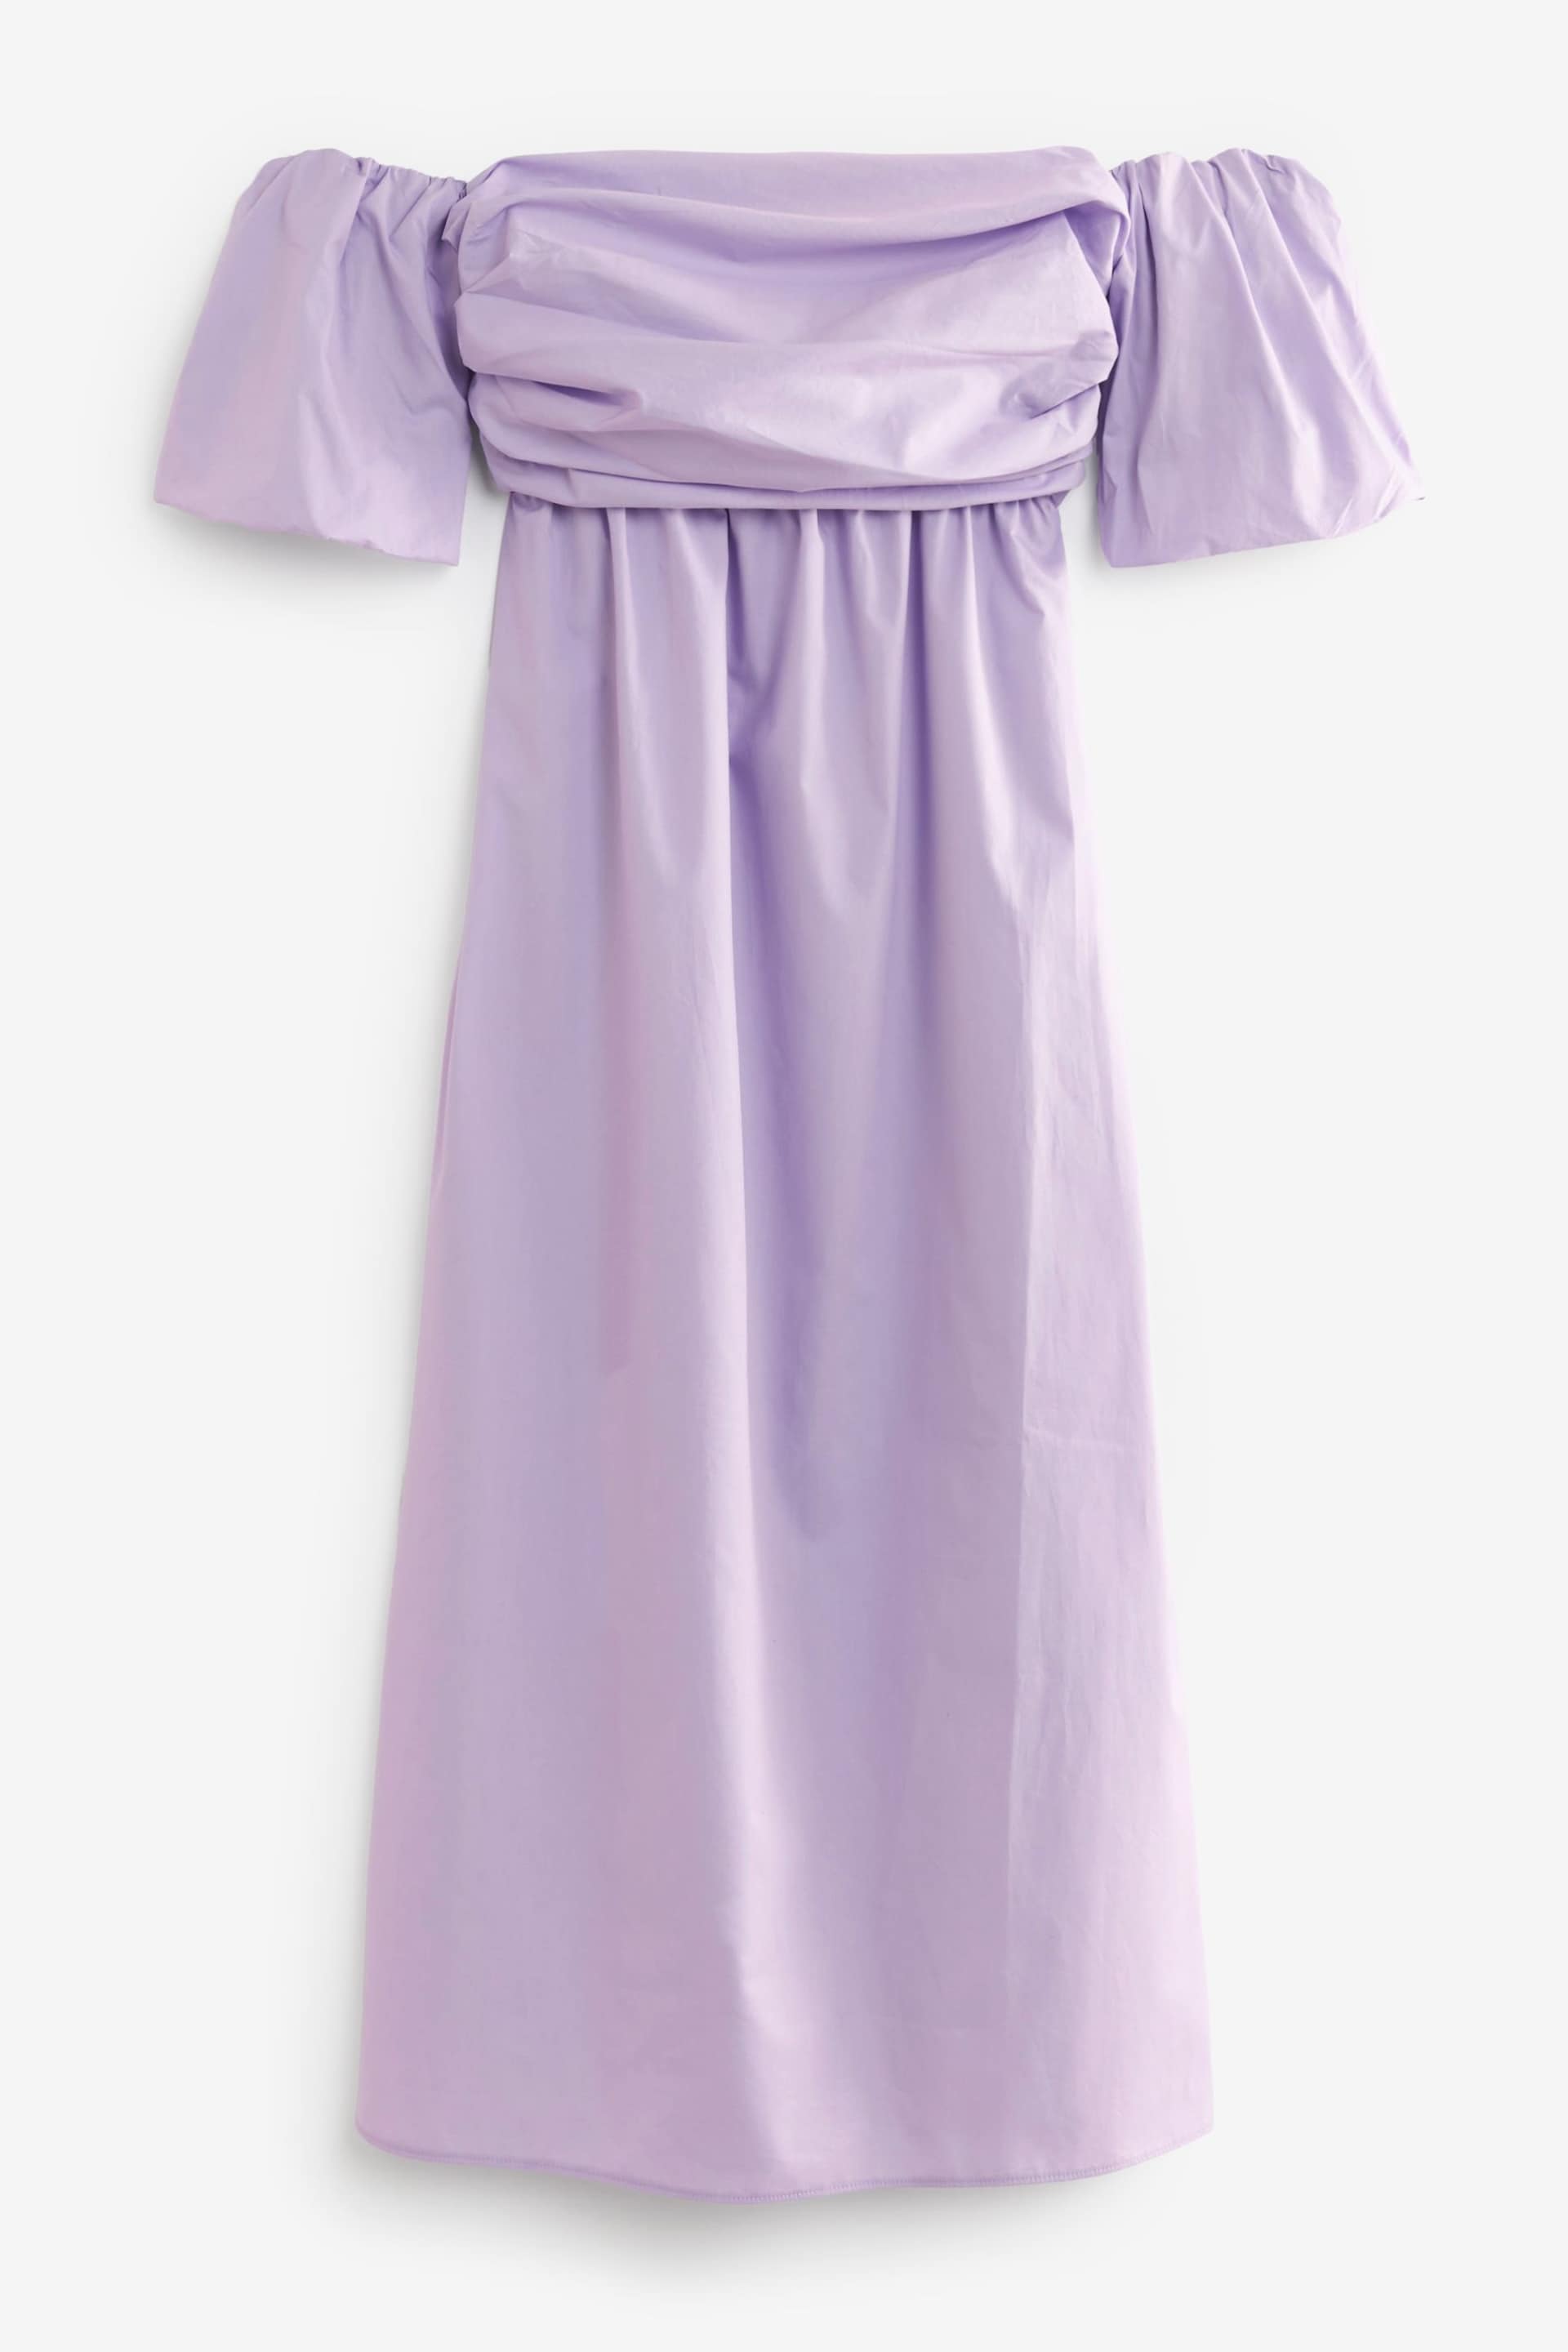 River Island Purple Ruched Bardot Poplin Dress - Image 5 of 6